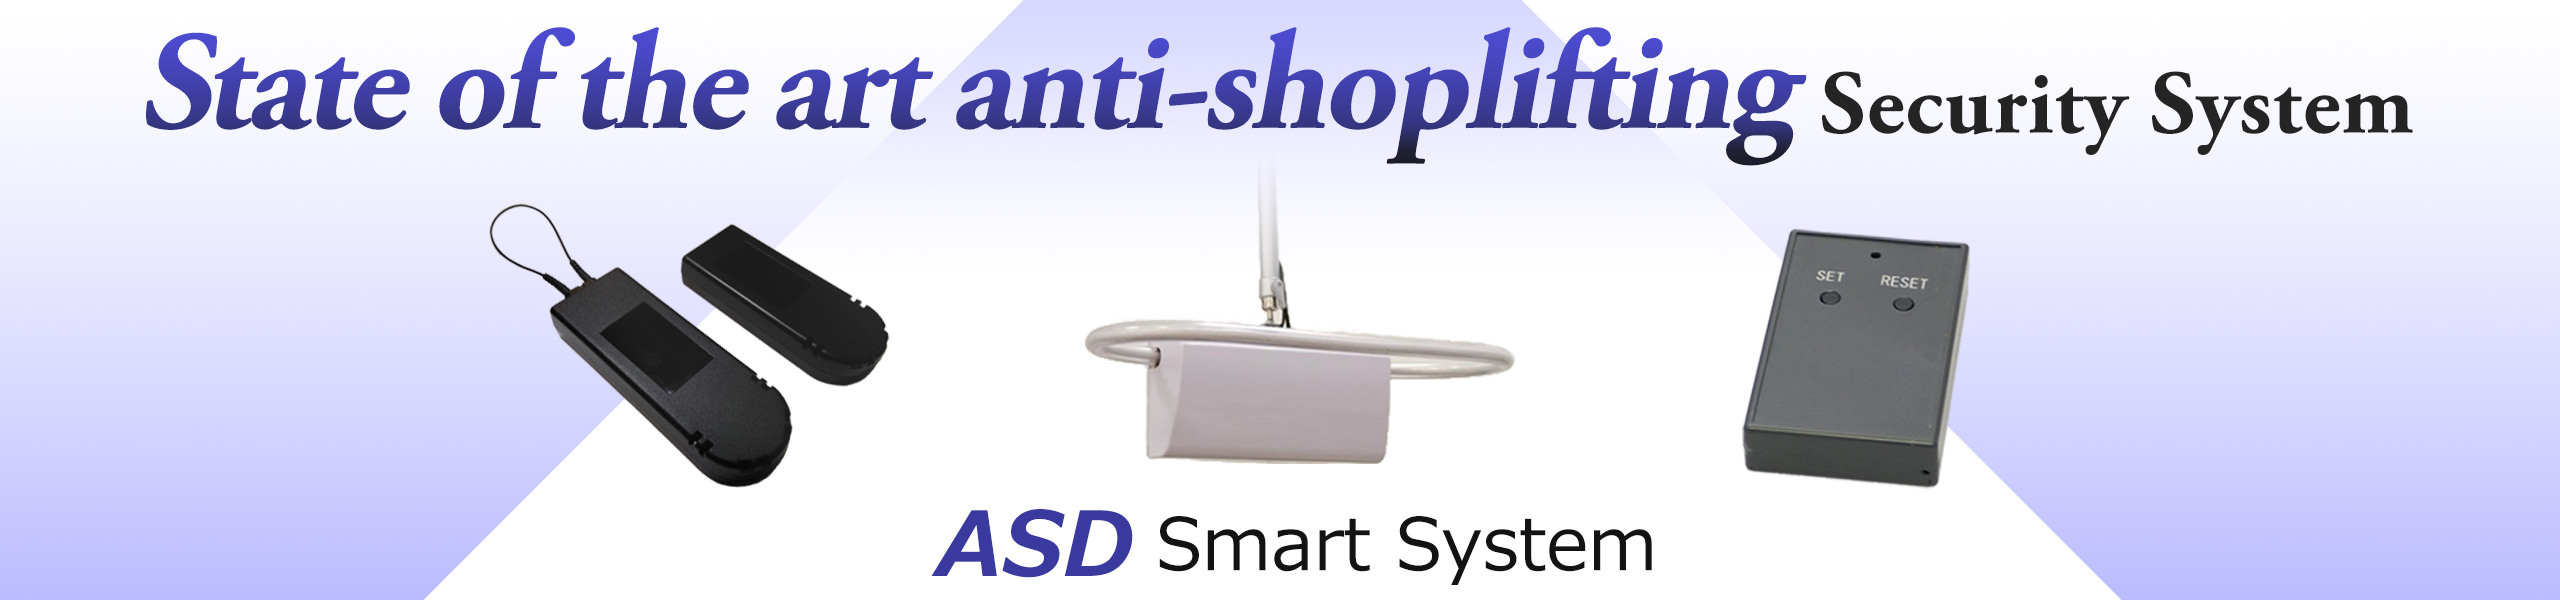 ASD Smart System Main Visual